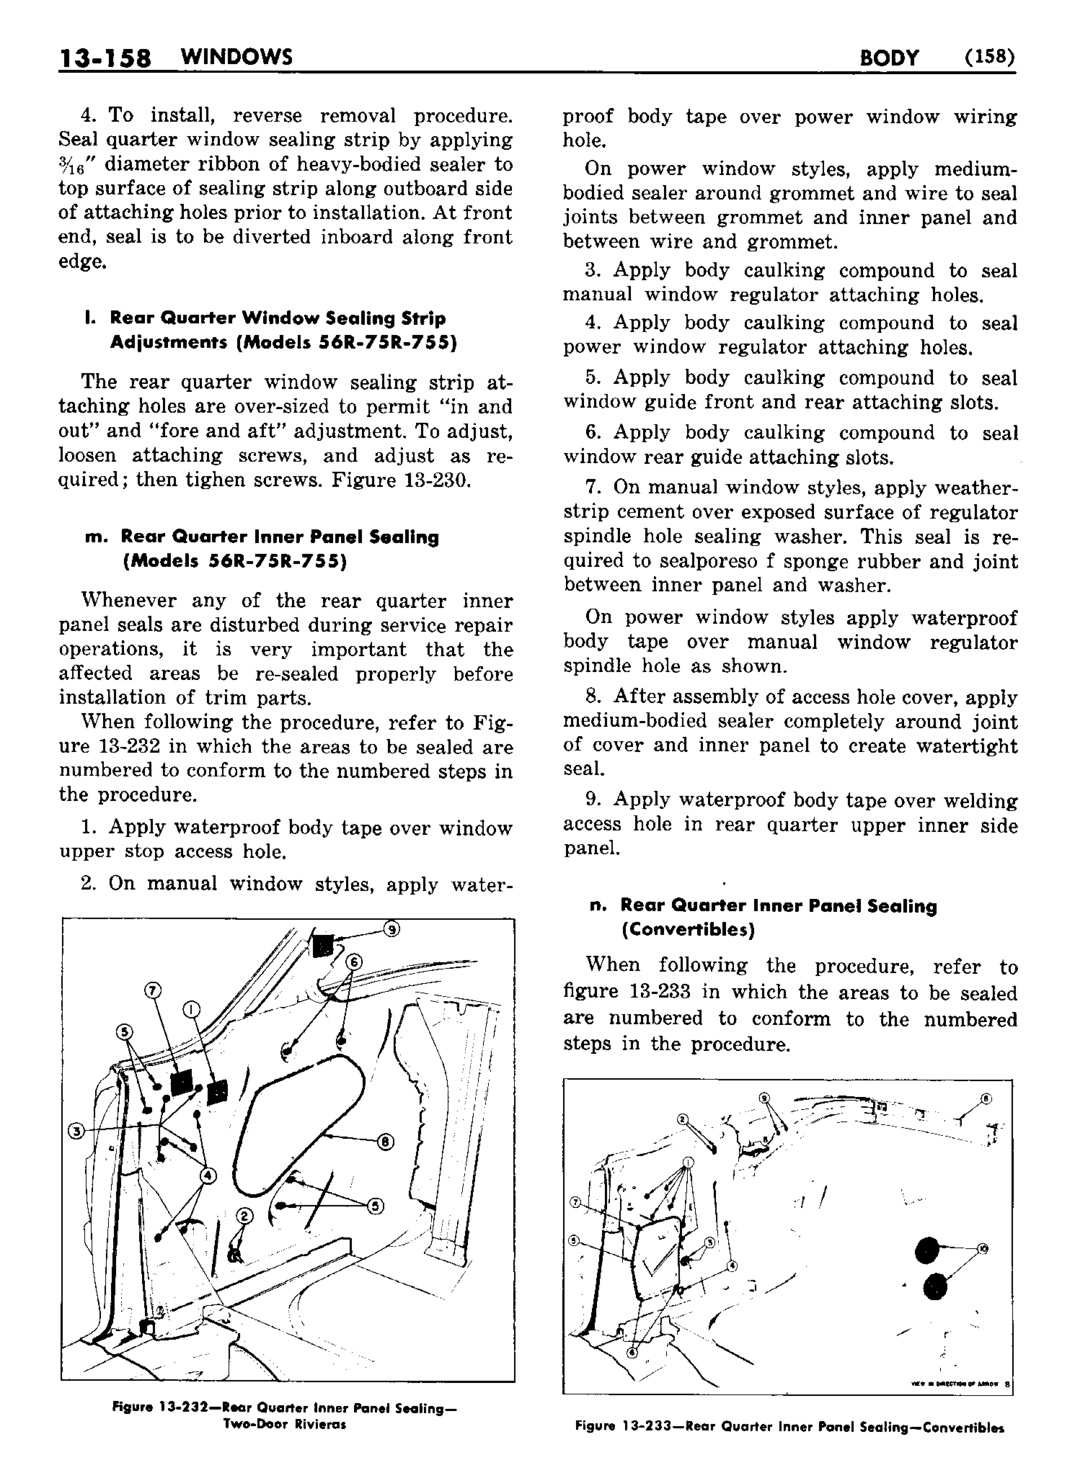 n_1958 Buick Body Service Manual-159-159.jpg